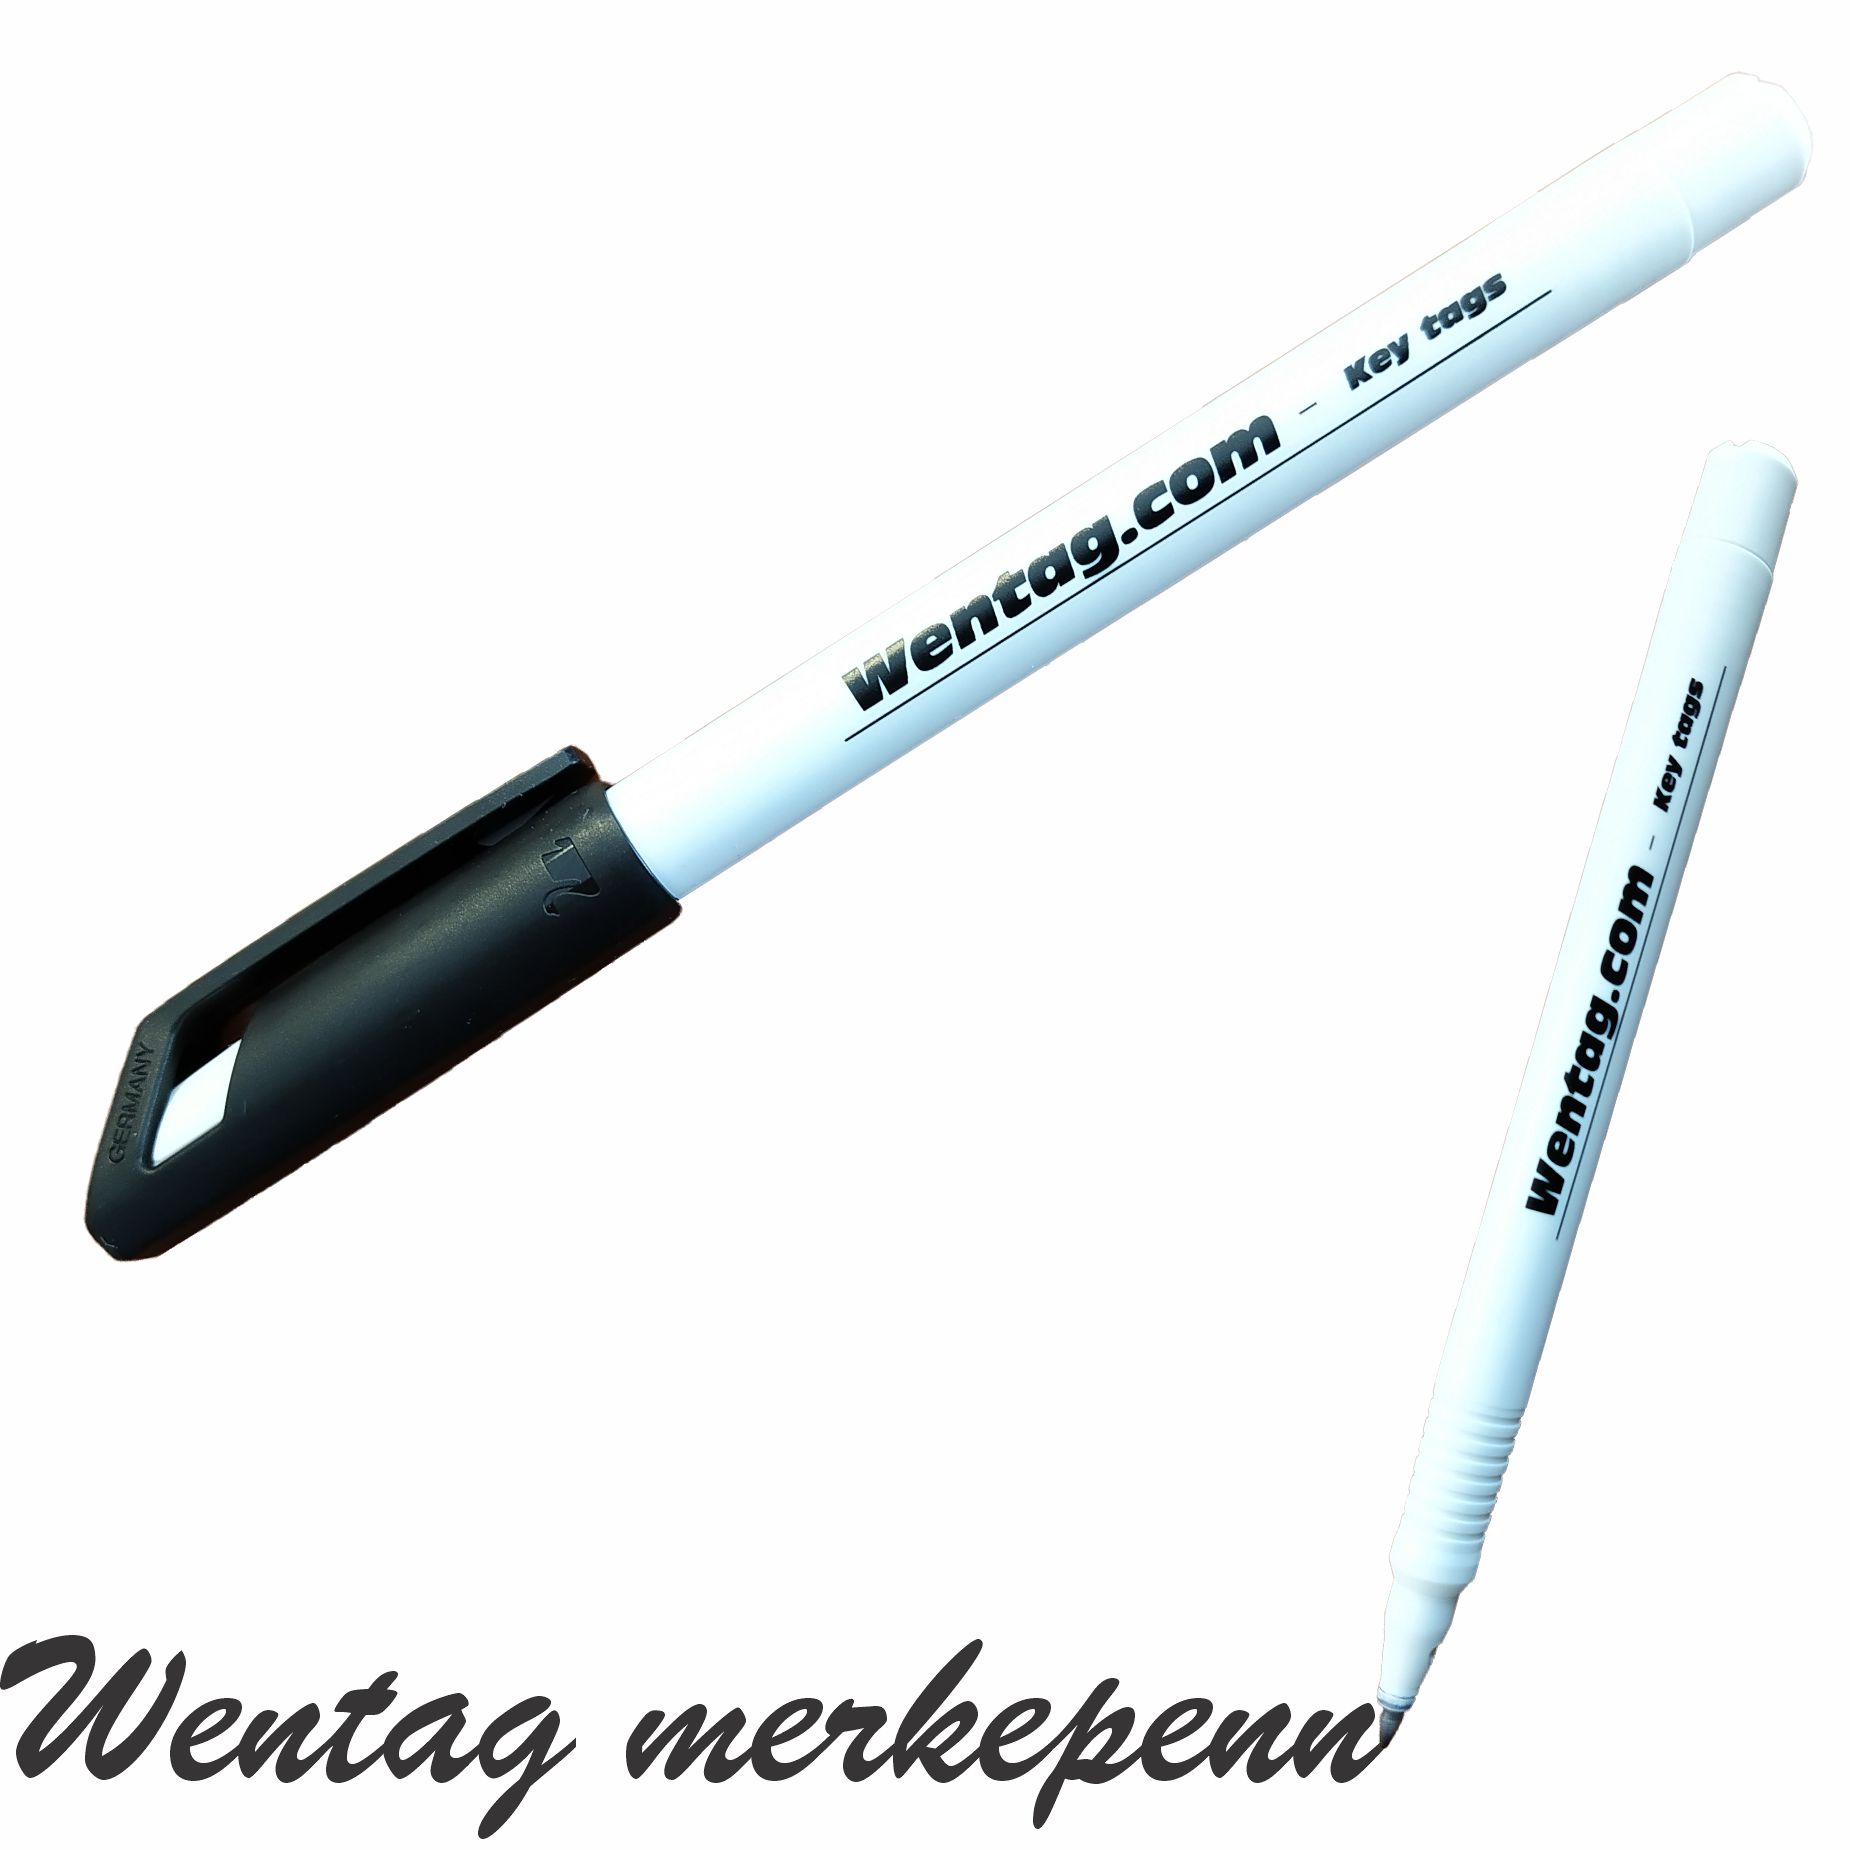 Wentag marking pen